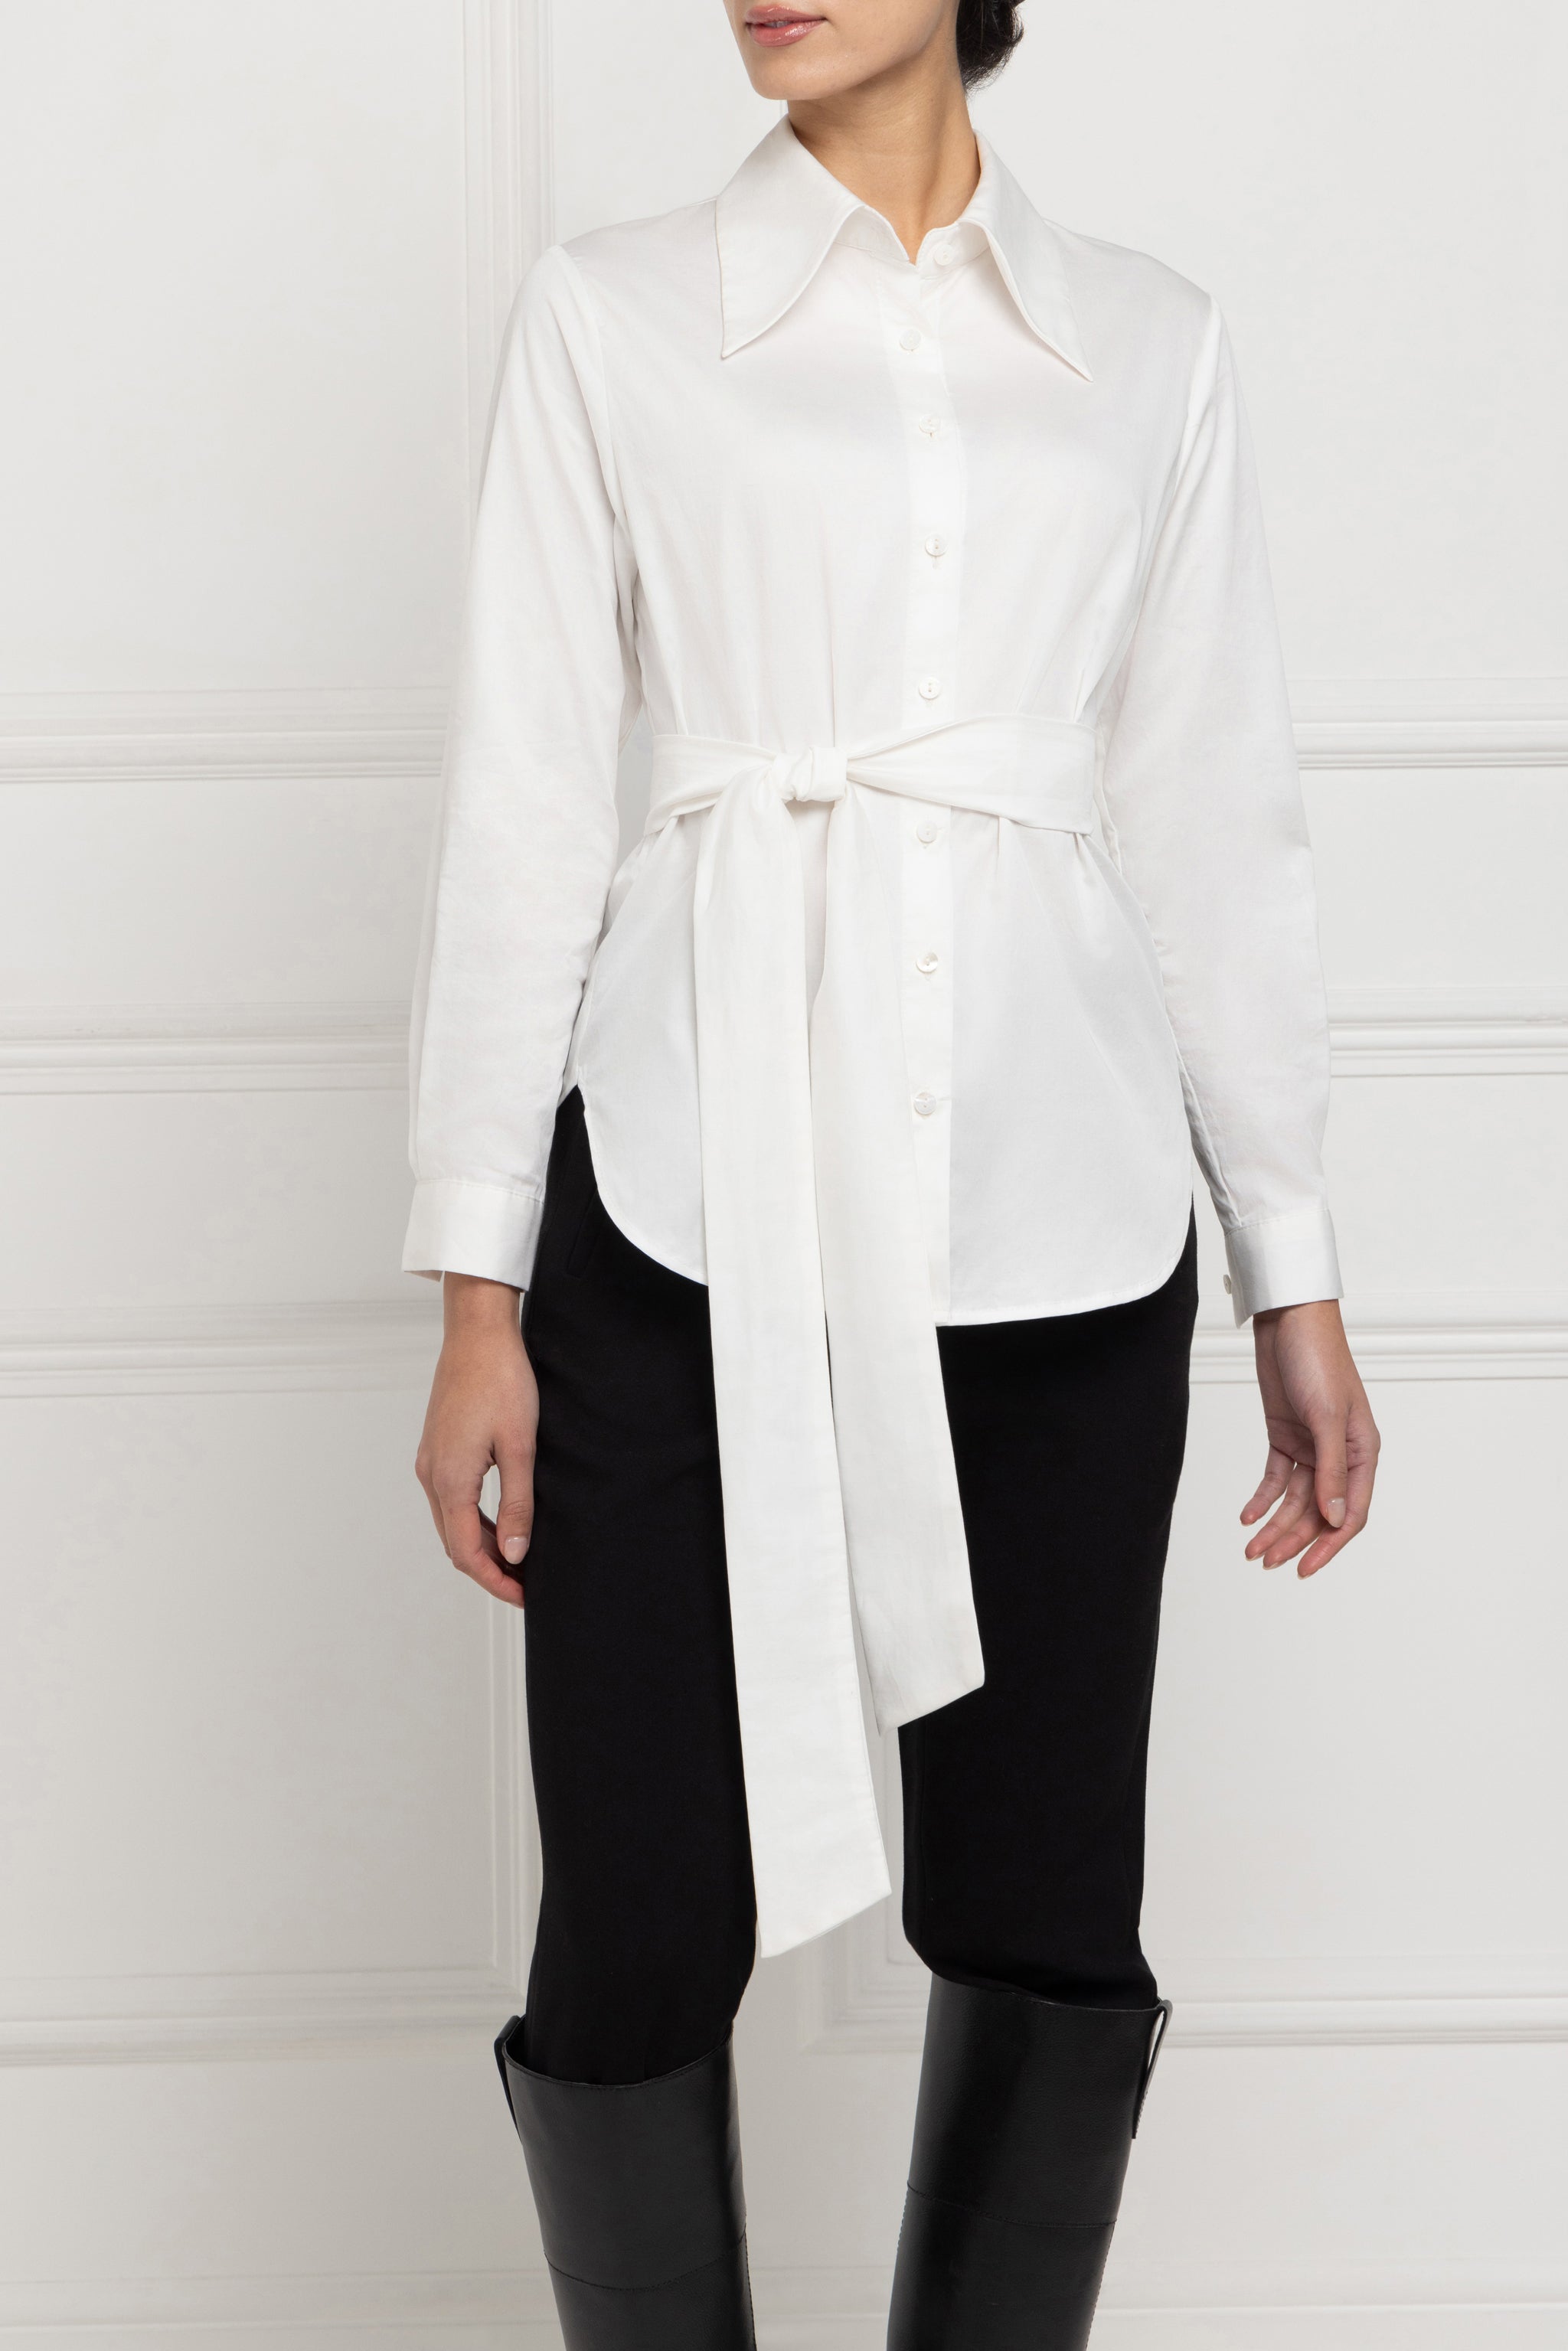 Multi-Way Shirt (White)